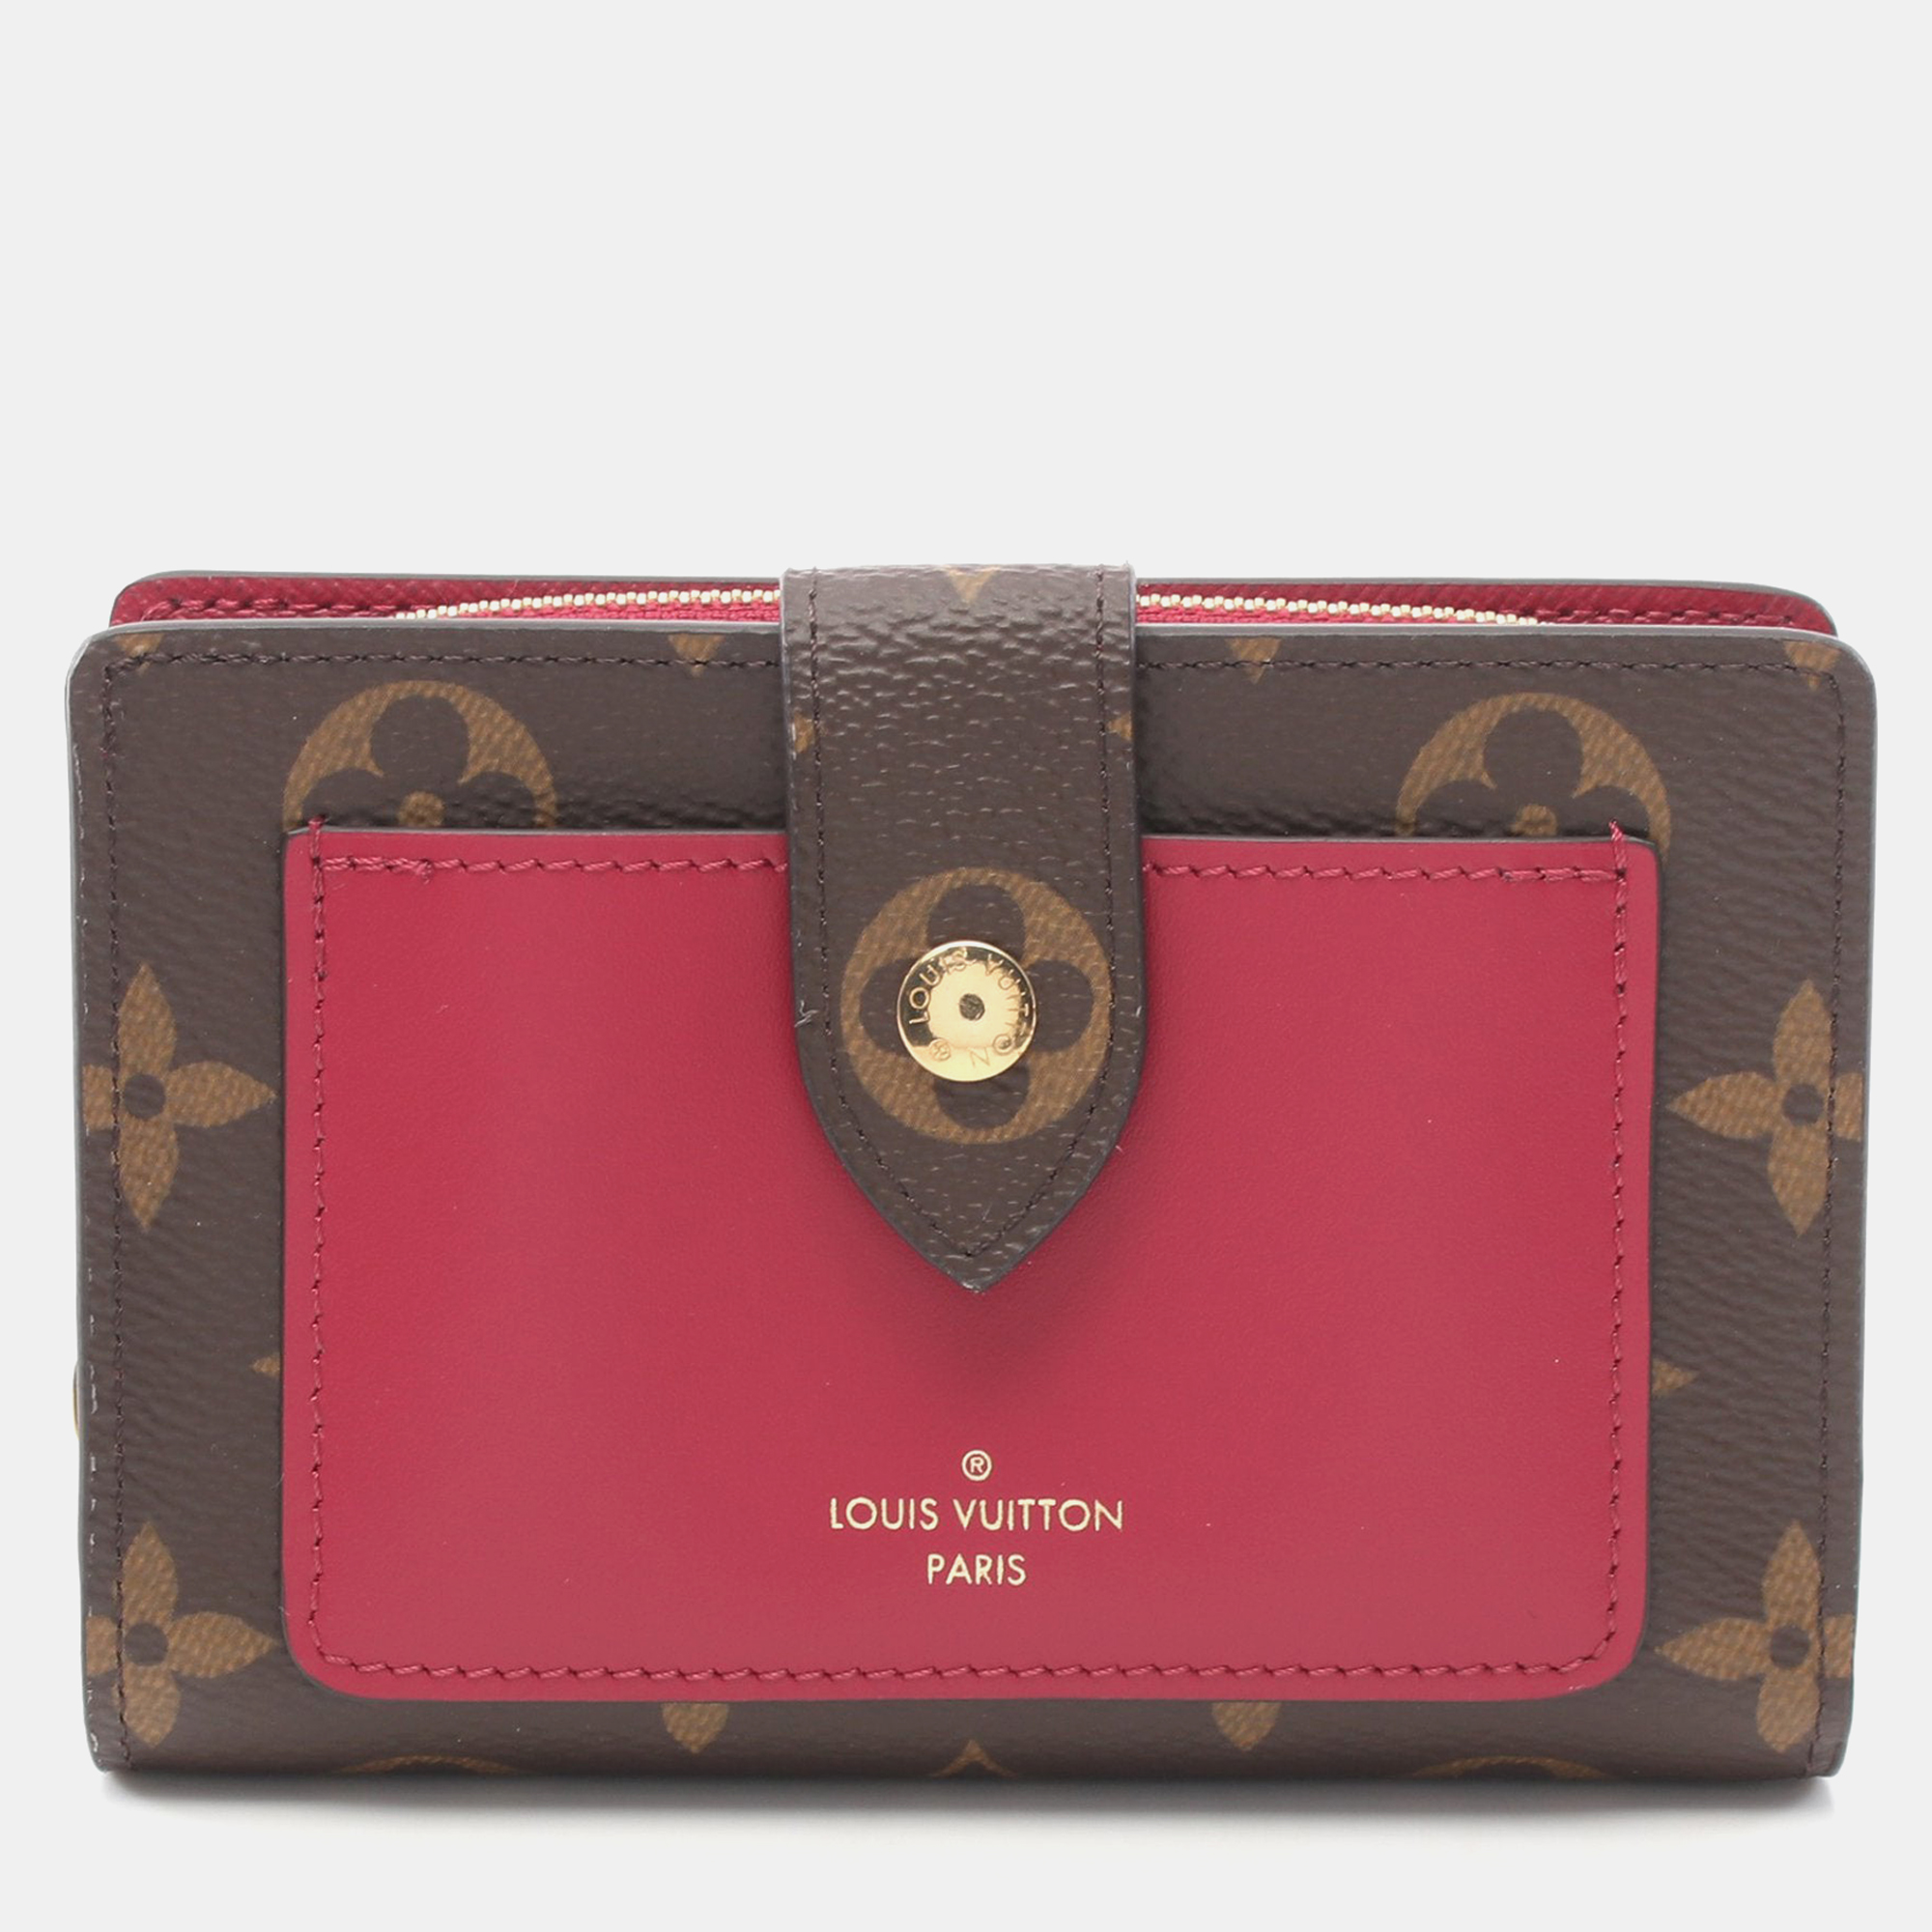 Pre-owned Louis Vuitton Portefeuil Juliet Monogram Fuchsia Bi-fold Wallet Pvc Leather Brown Pink Purple